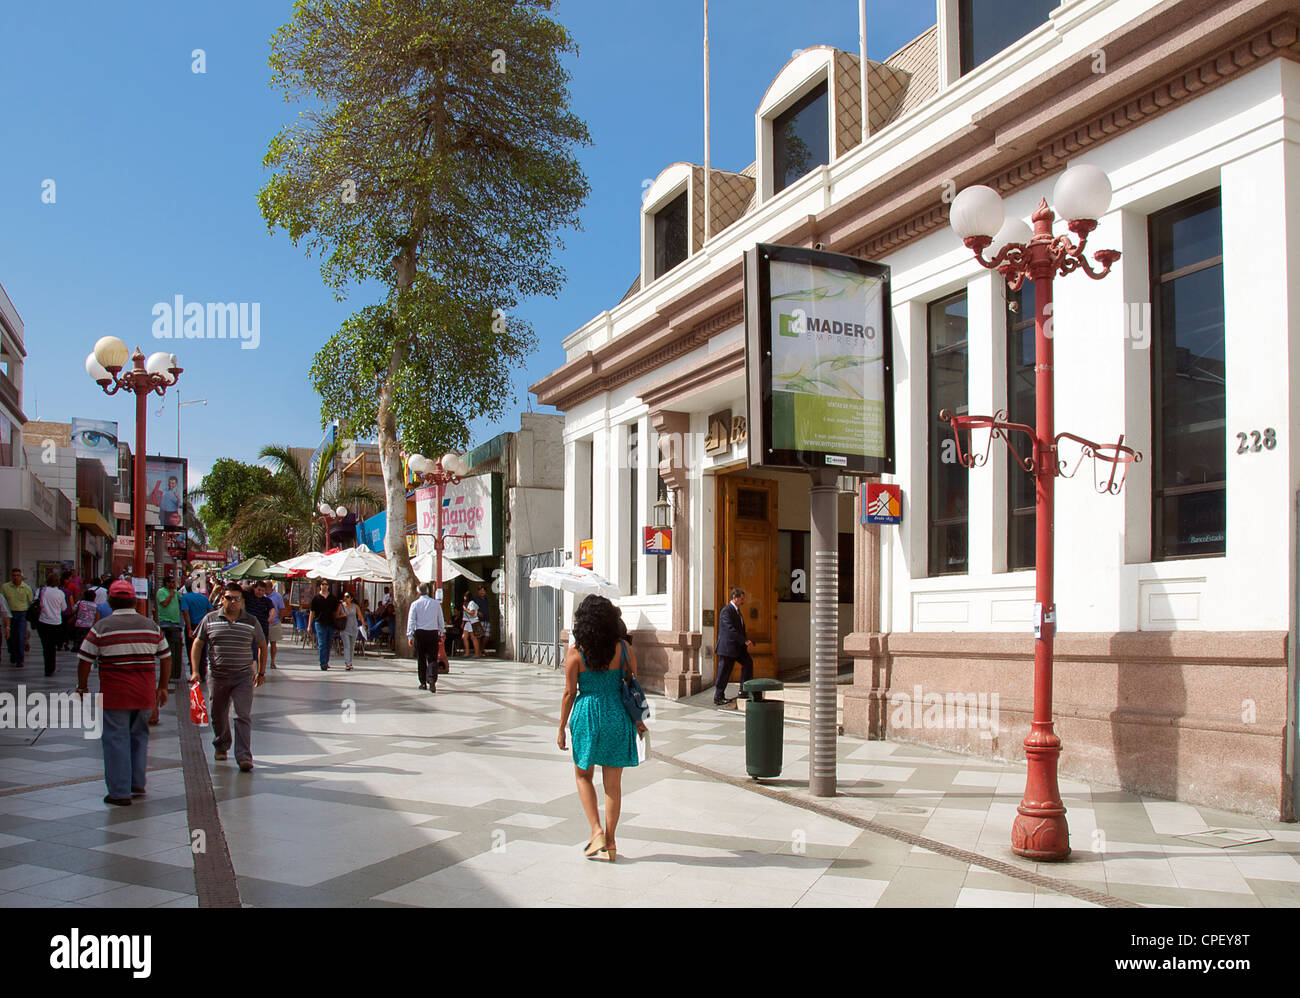 Pedestrianized street Arica Chile Stock Photo